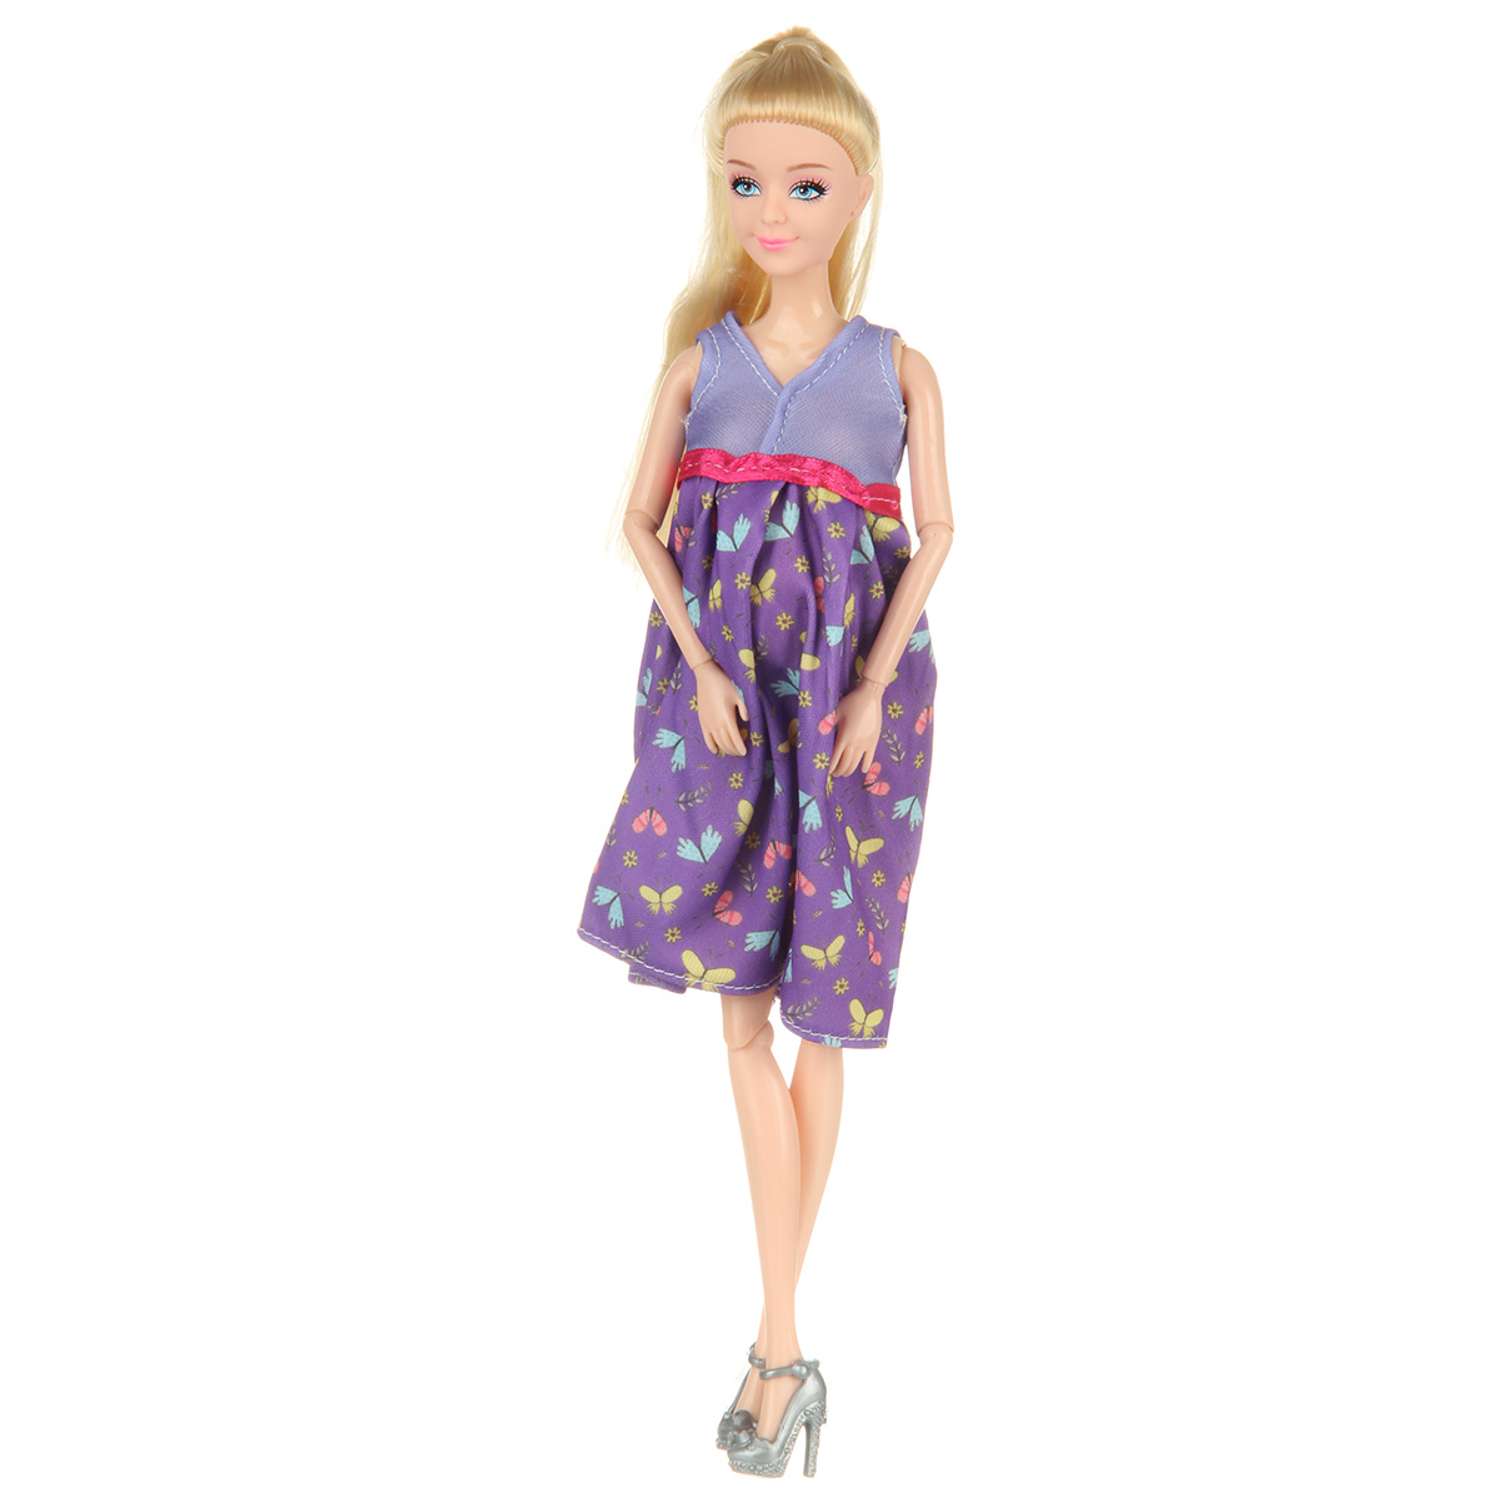 Кукла модель Барби Veld Co будущая мама 132274 - фото 8